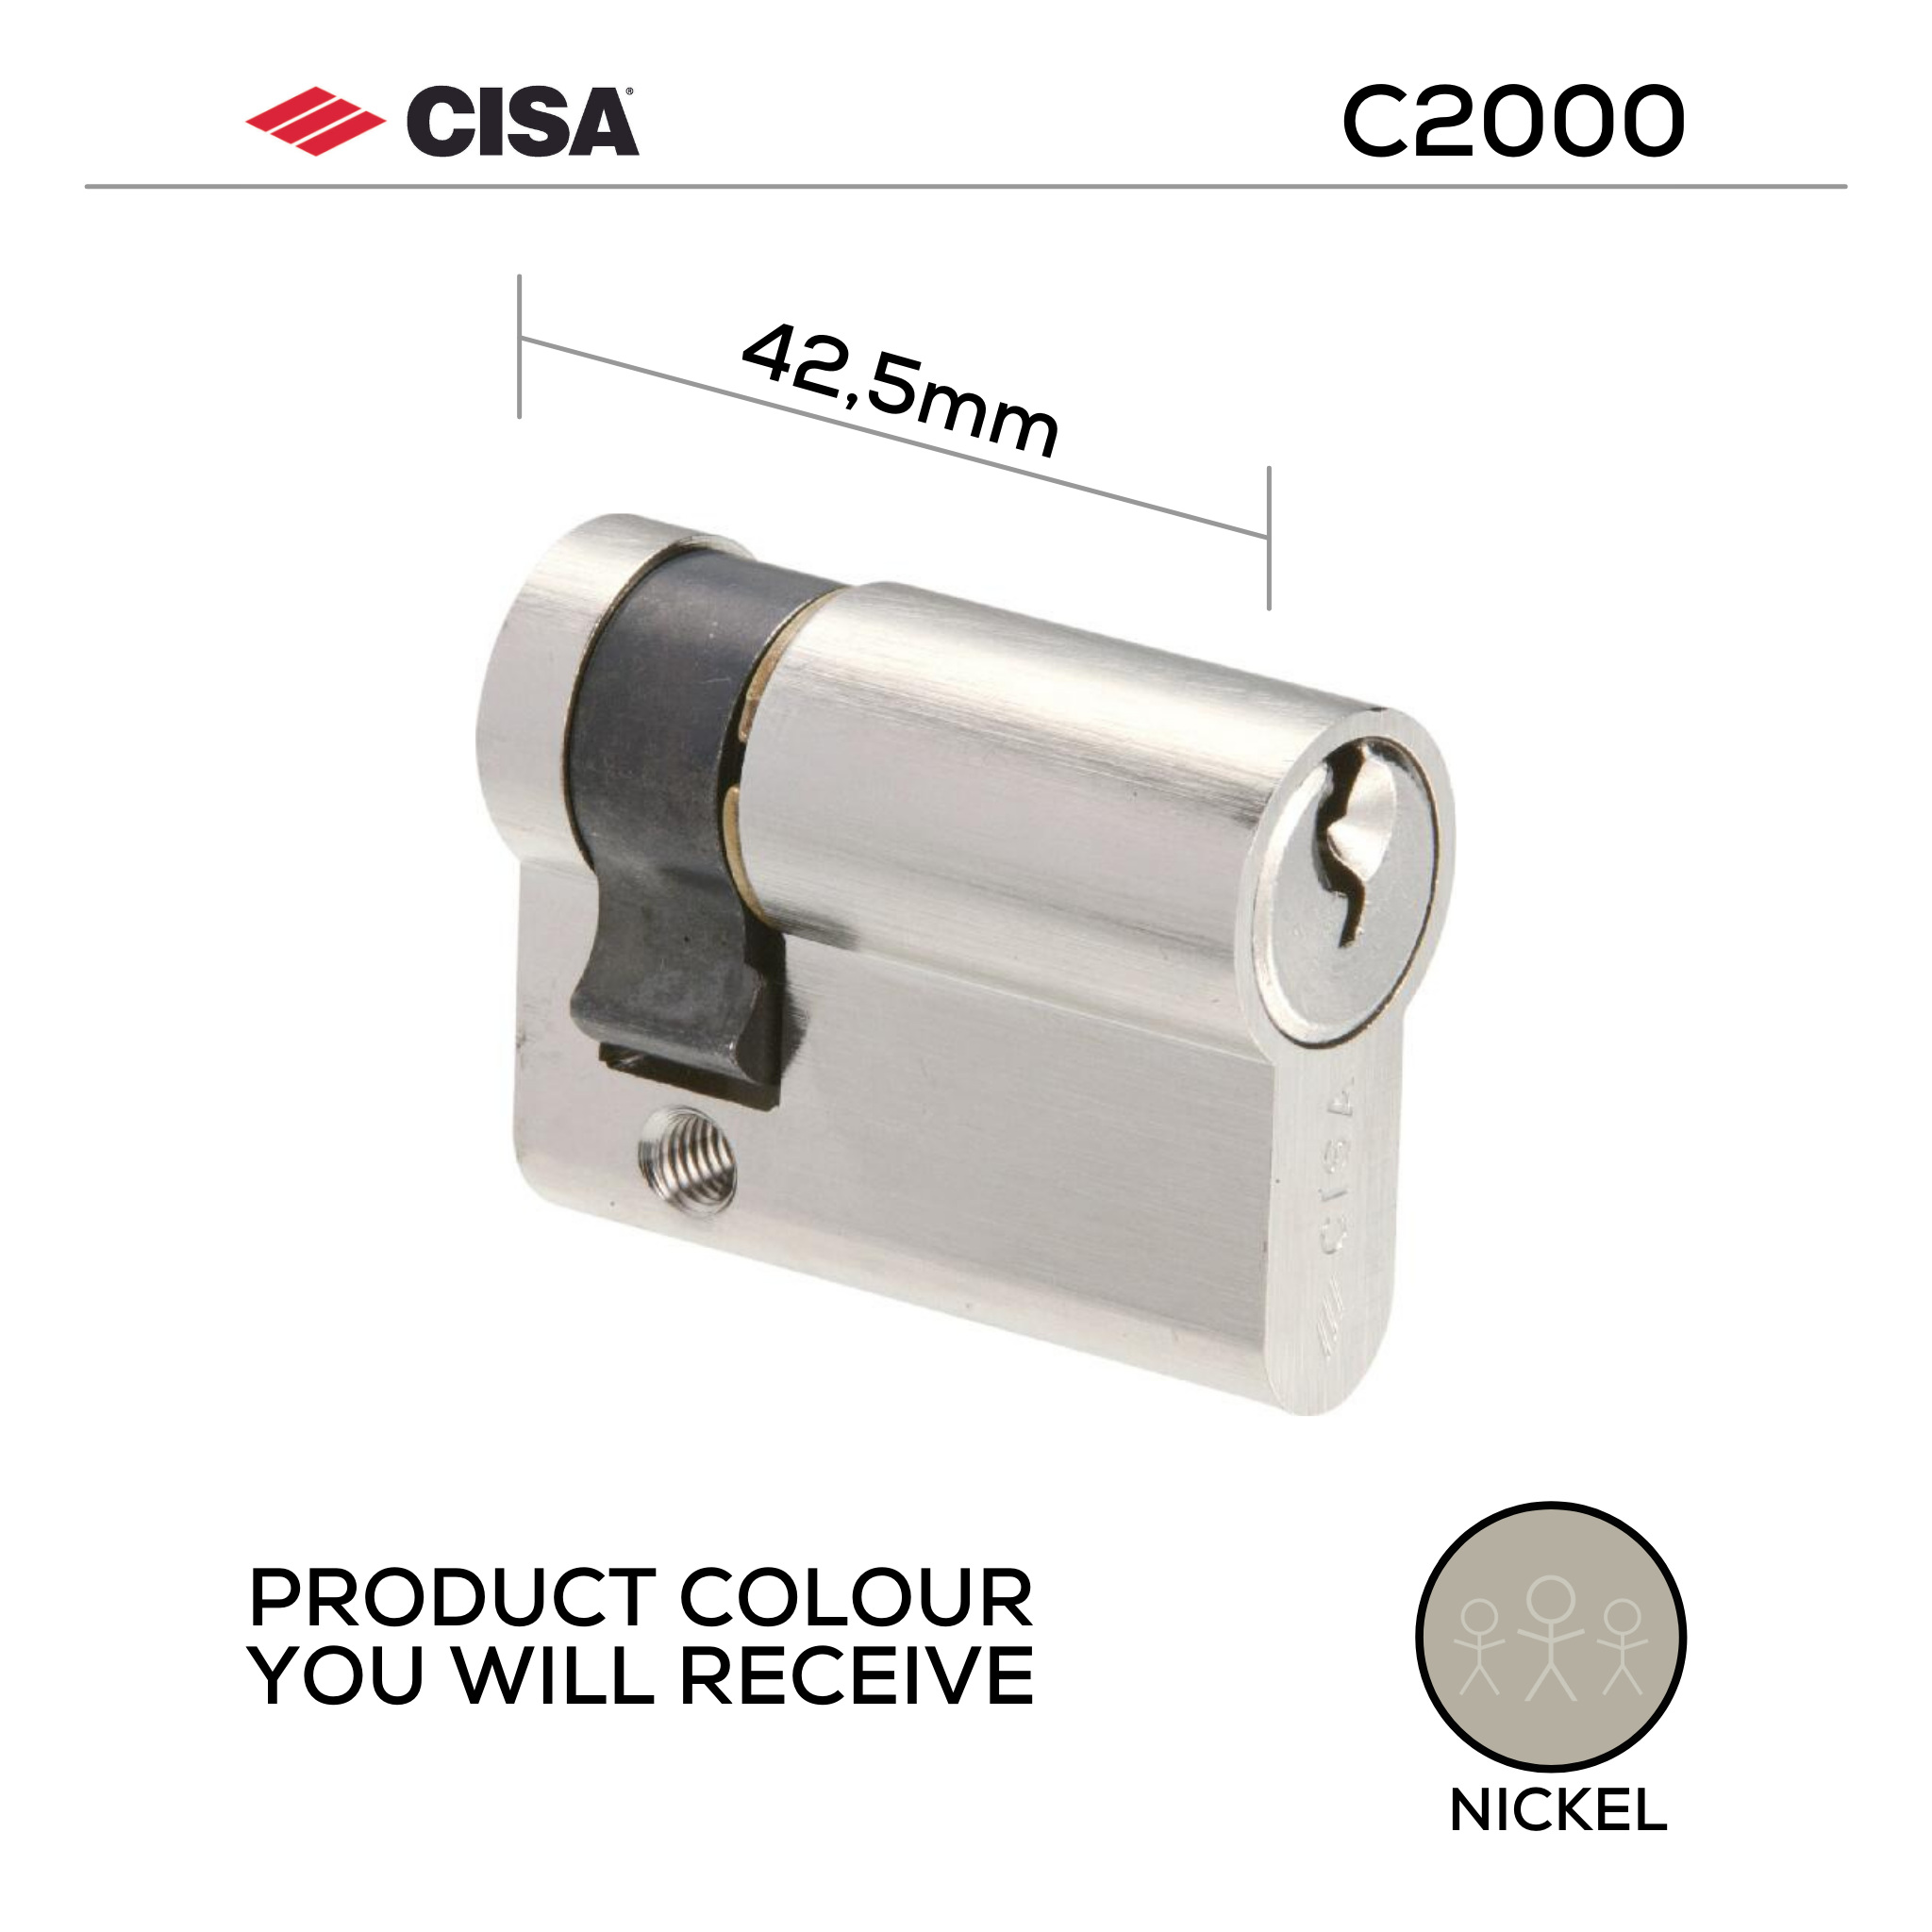 09026-02-12-KD, 42,5mm - 32.5/10, Oval Half (Single Cylinder), C2000, Key, Keyed to Differ (Standard), Nickel, CISA